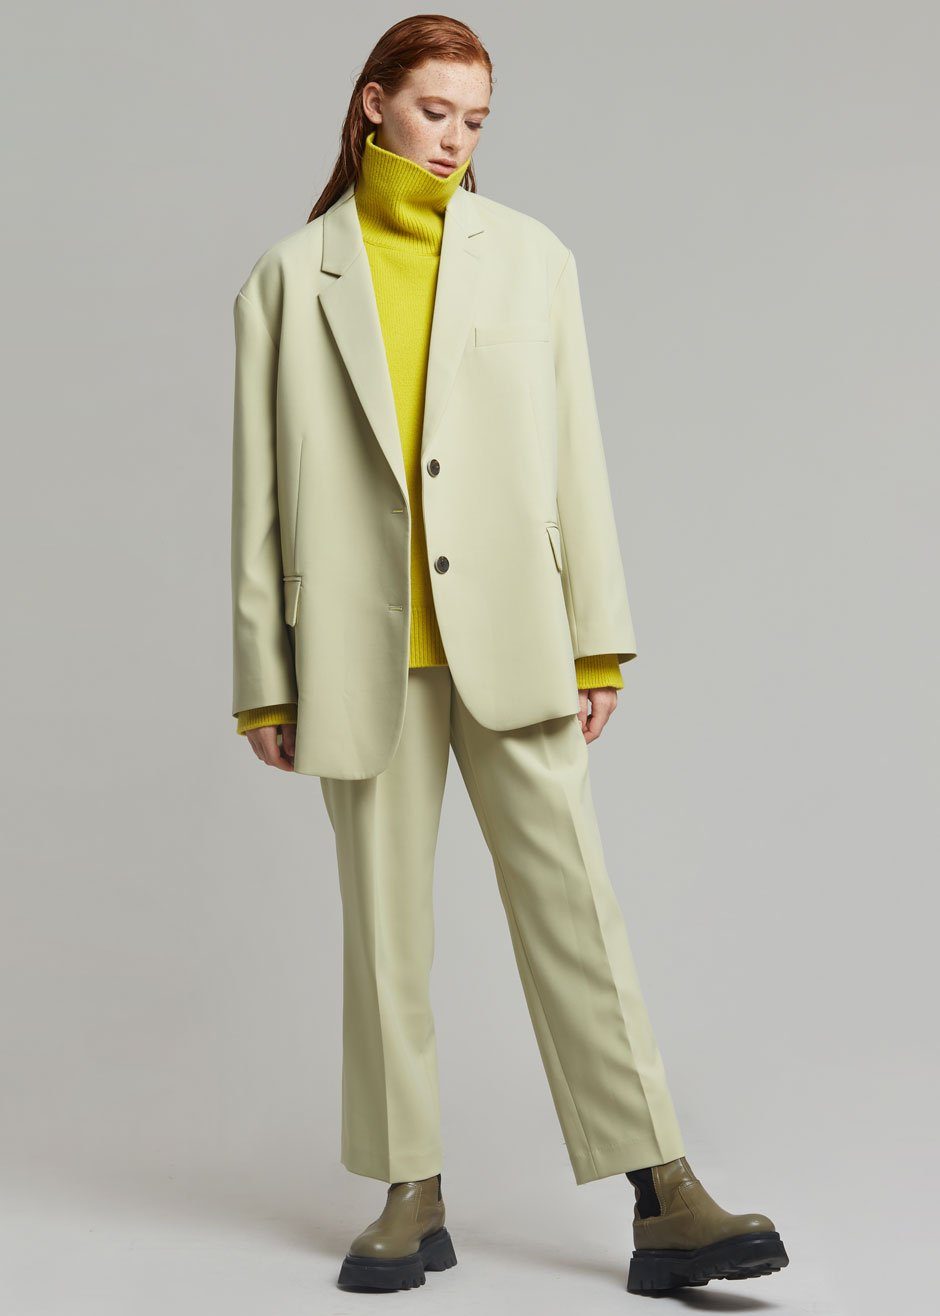 Mens Yellow 2 Button suit separates by Salvatore Exte - Fashion Suit Outlet